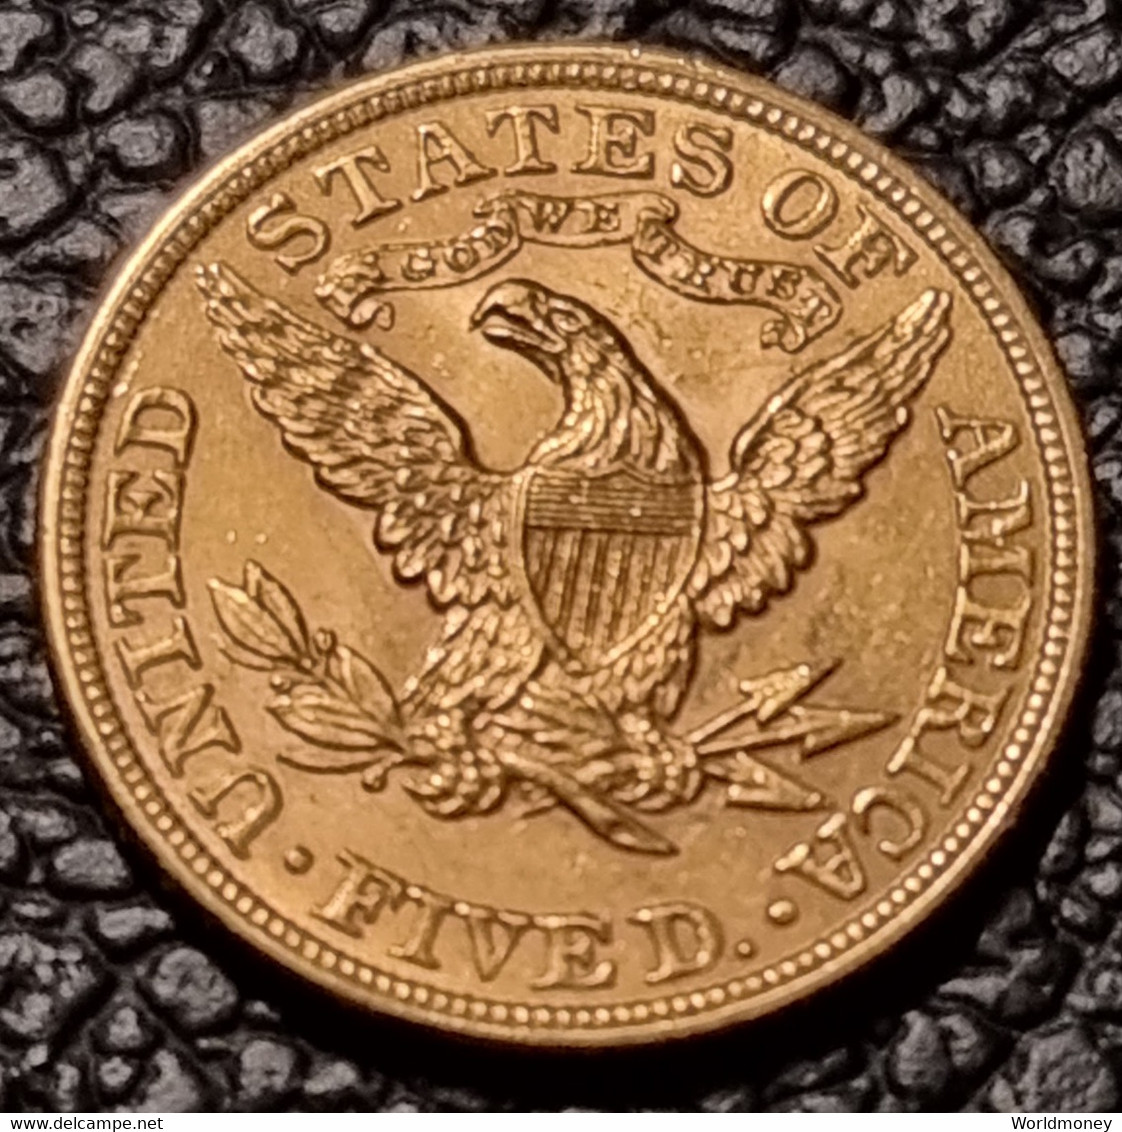 United States 5 Dollars 1899 (Gold) - 5$ - Half Eagles - 1866-1908: Coronet Head